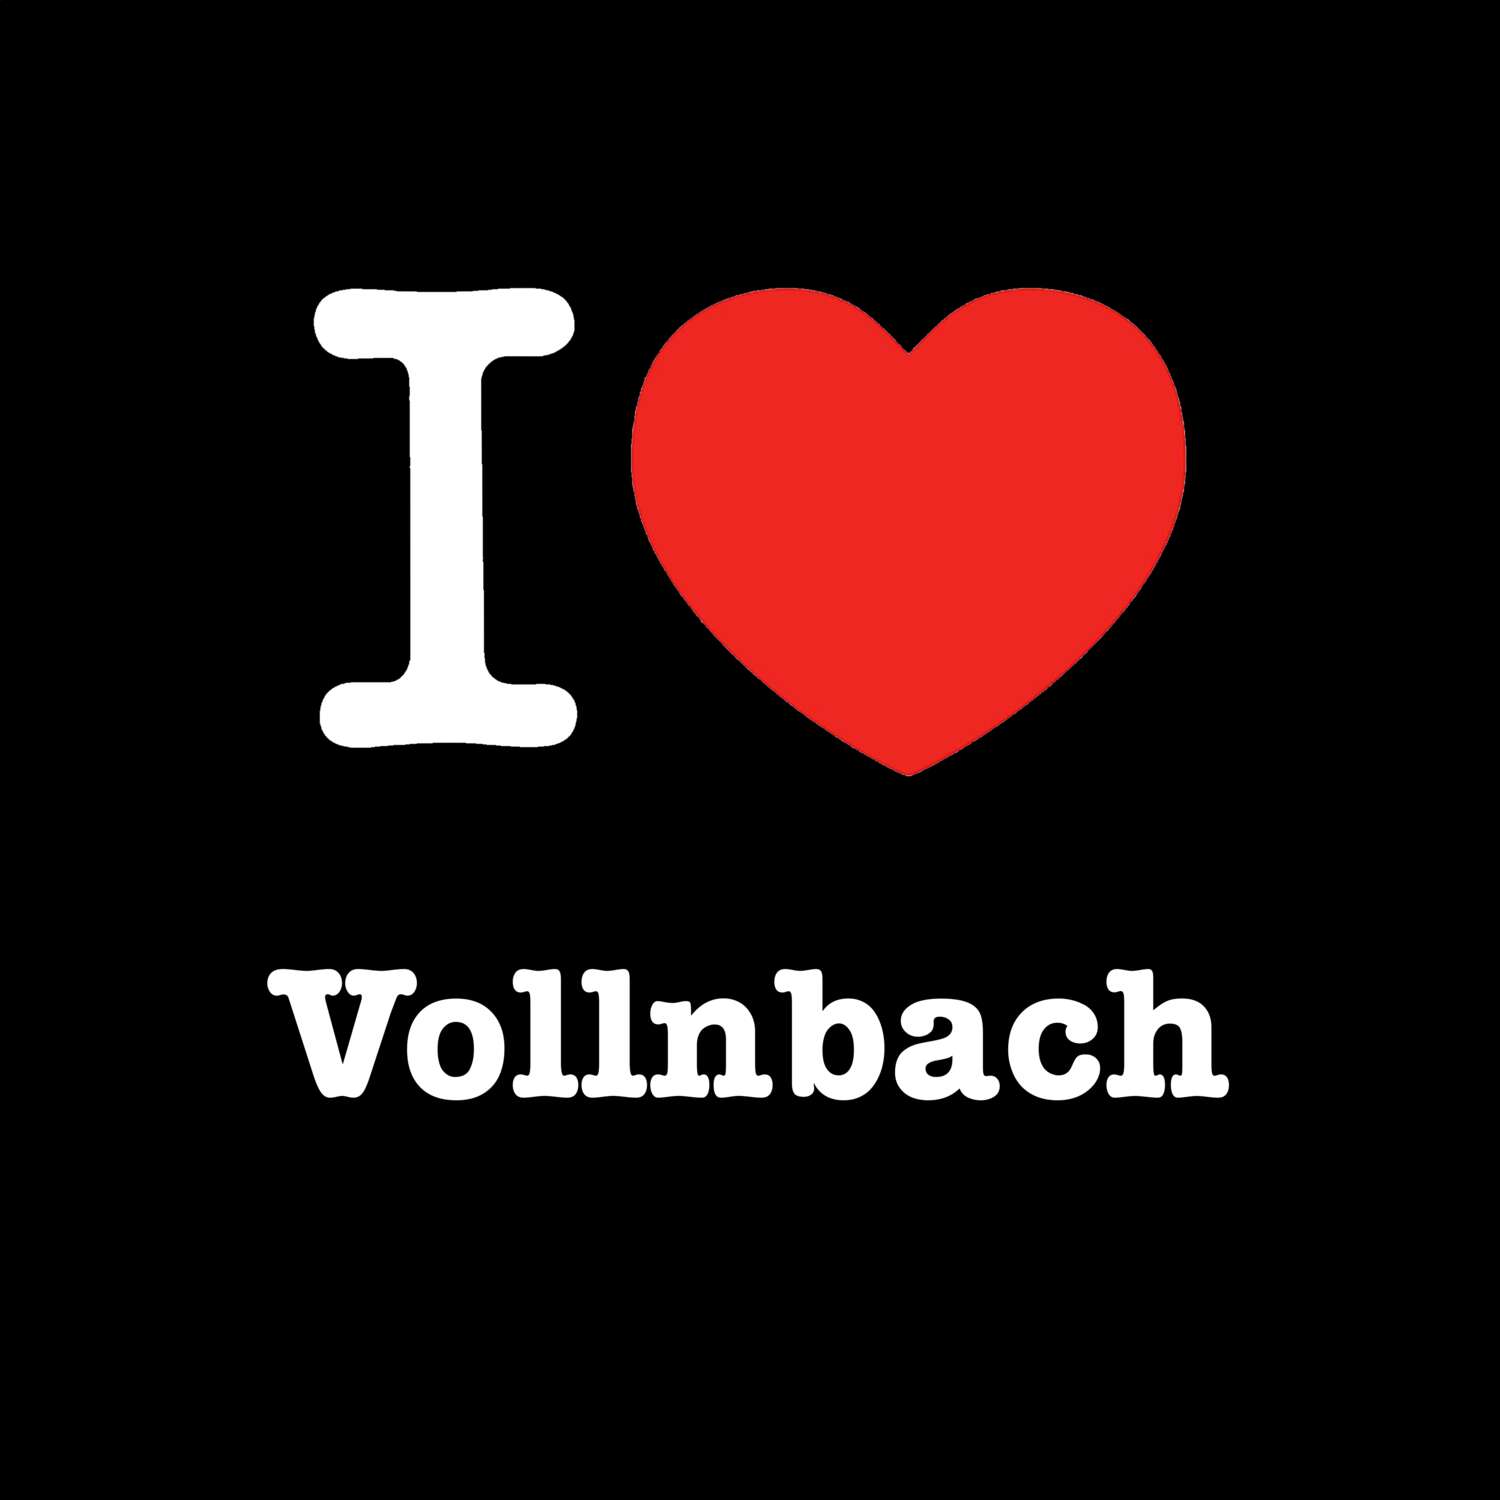 Vollnbach T-Shirt »I love«